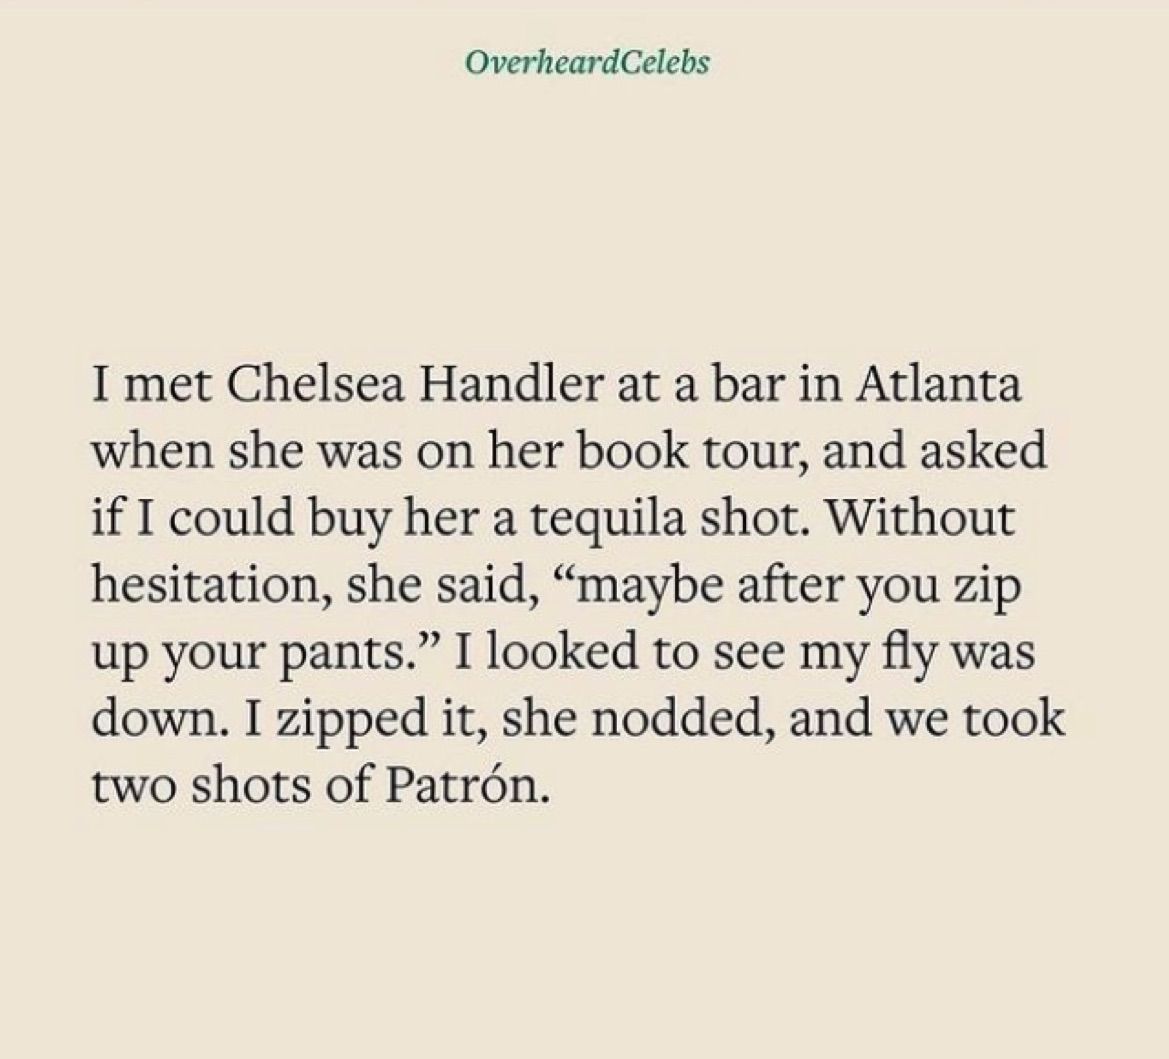 Es va escoltar la història del Chelsea Handler de Celebs